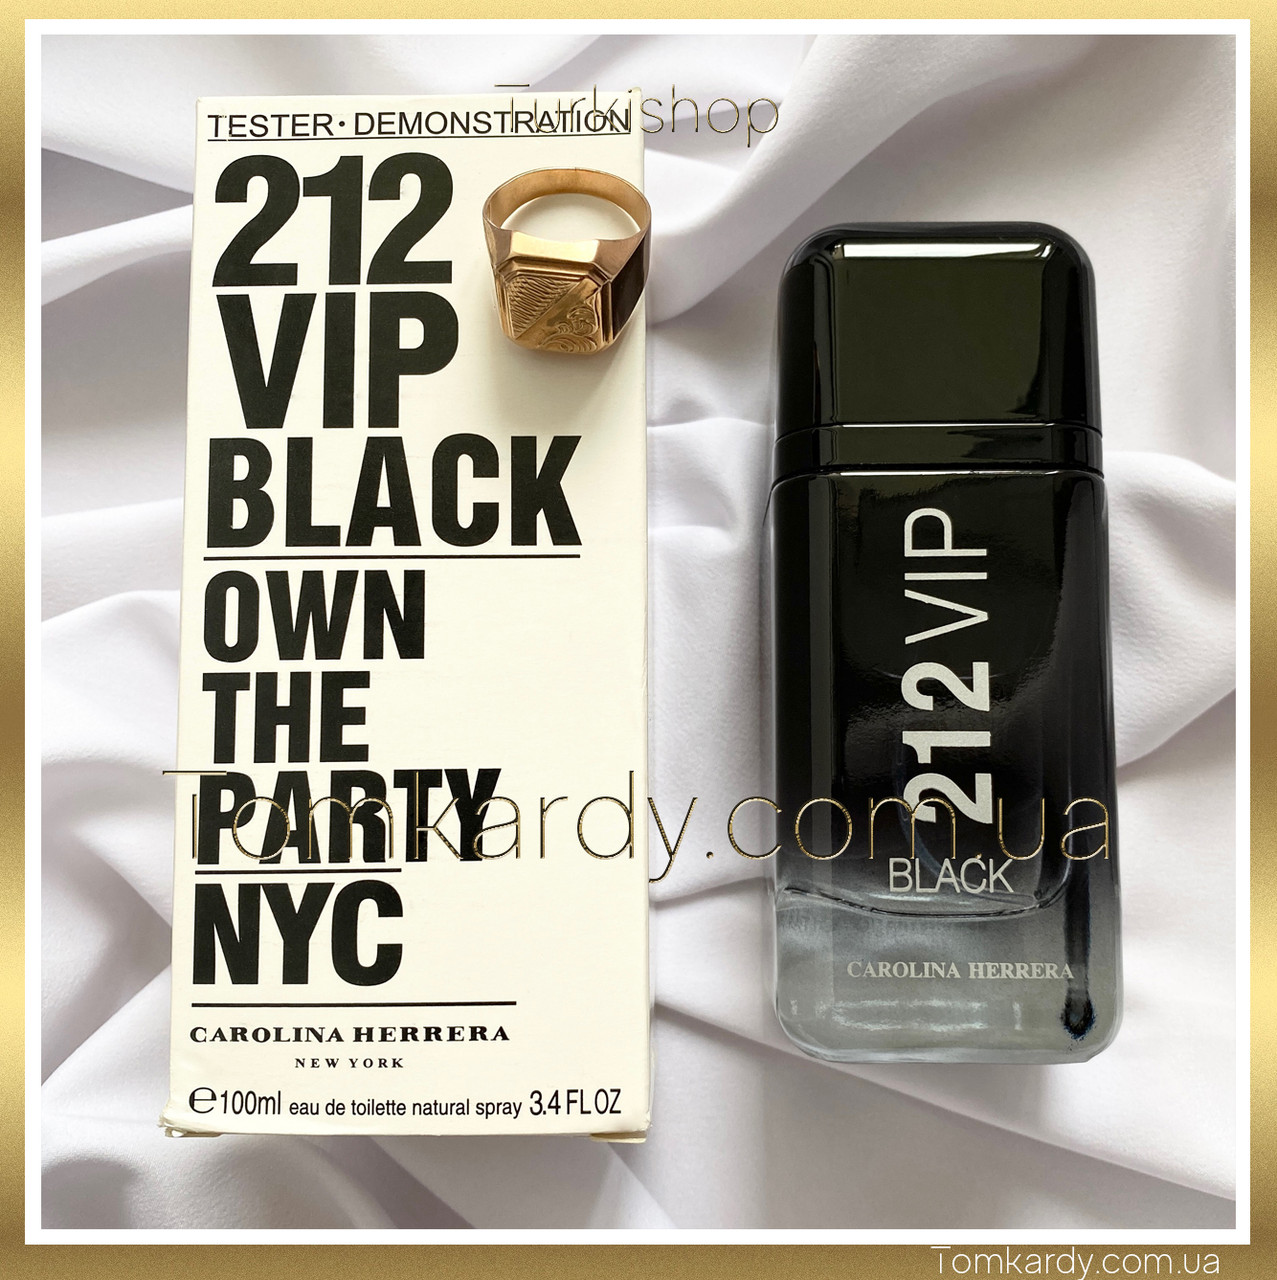 Чоловічі парфуми Carolina Herrera 212 VIP Black [Tester] 100 ml. Кароліна Еррера 212 Віп Мен Блек (Тестер) 100 мл.